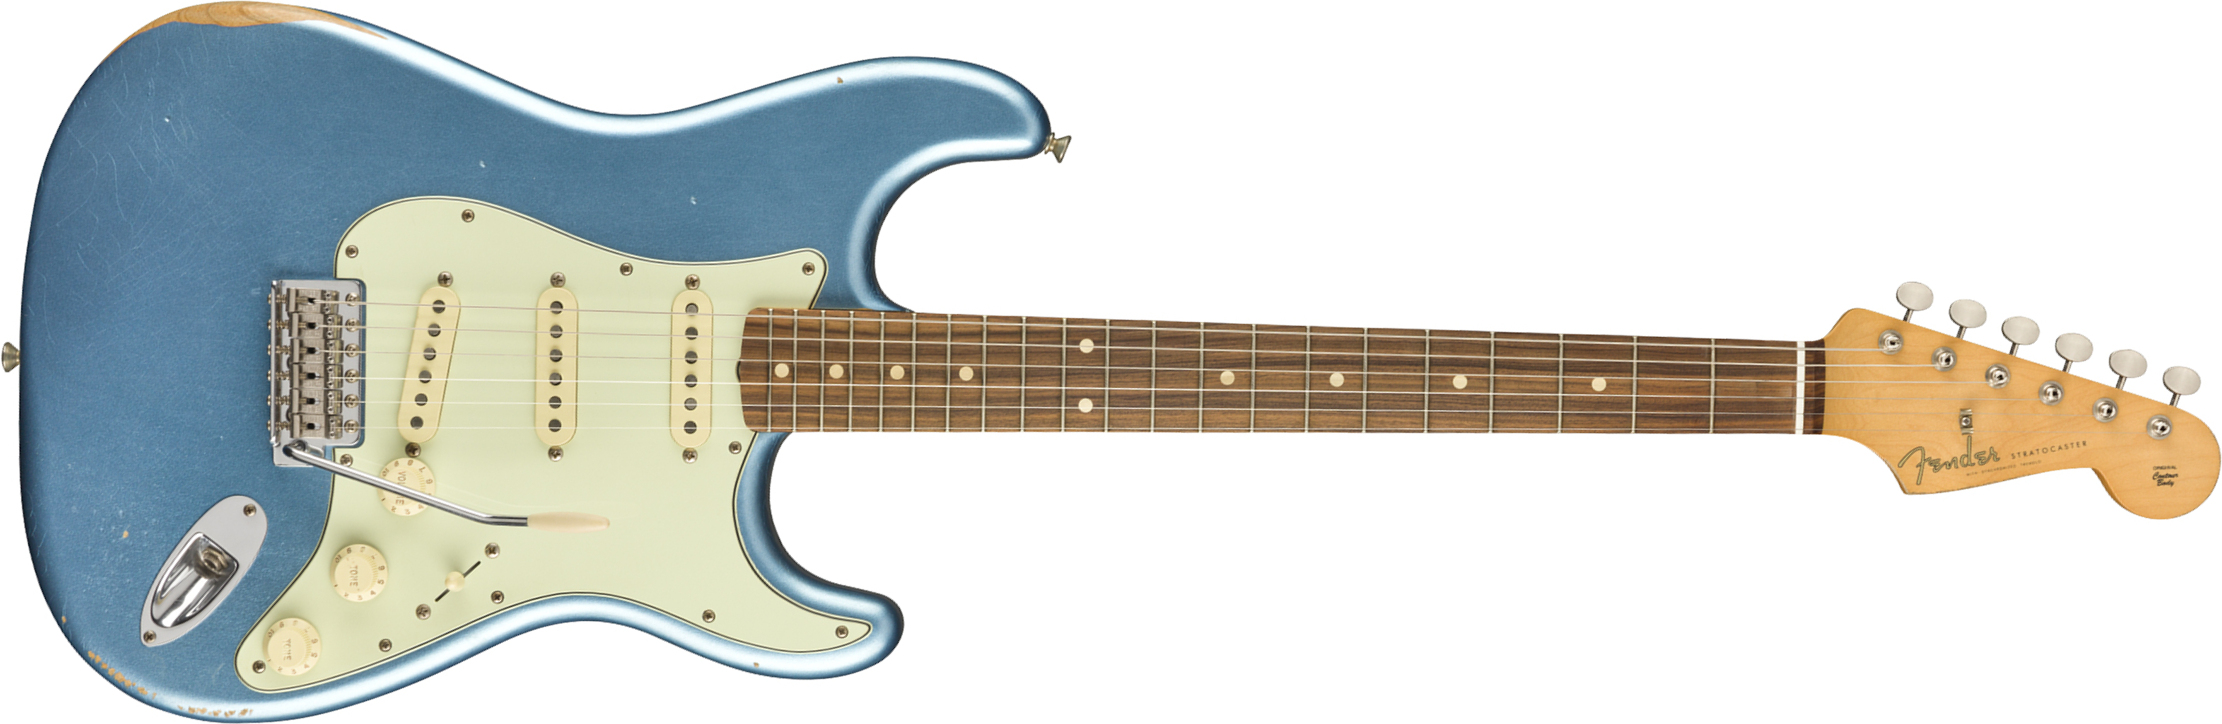 Fender Strat 60s Road Worn Mex Pf - Lake Placid Blue - E-Gitarre in Str-Form - Main picture